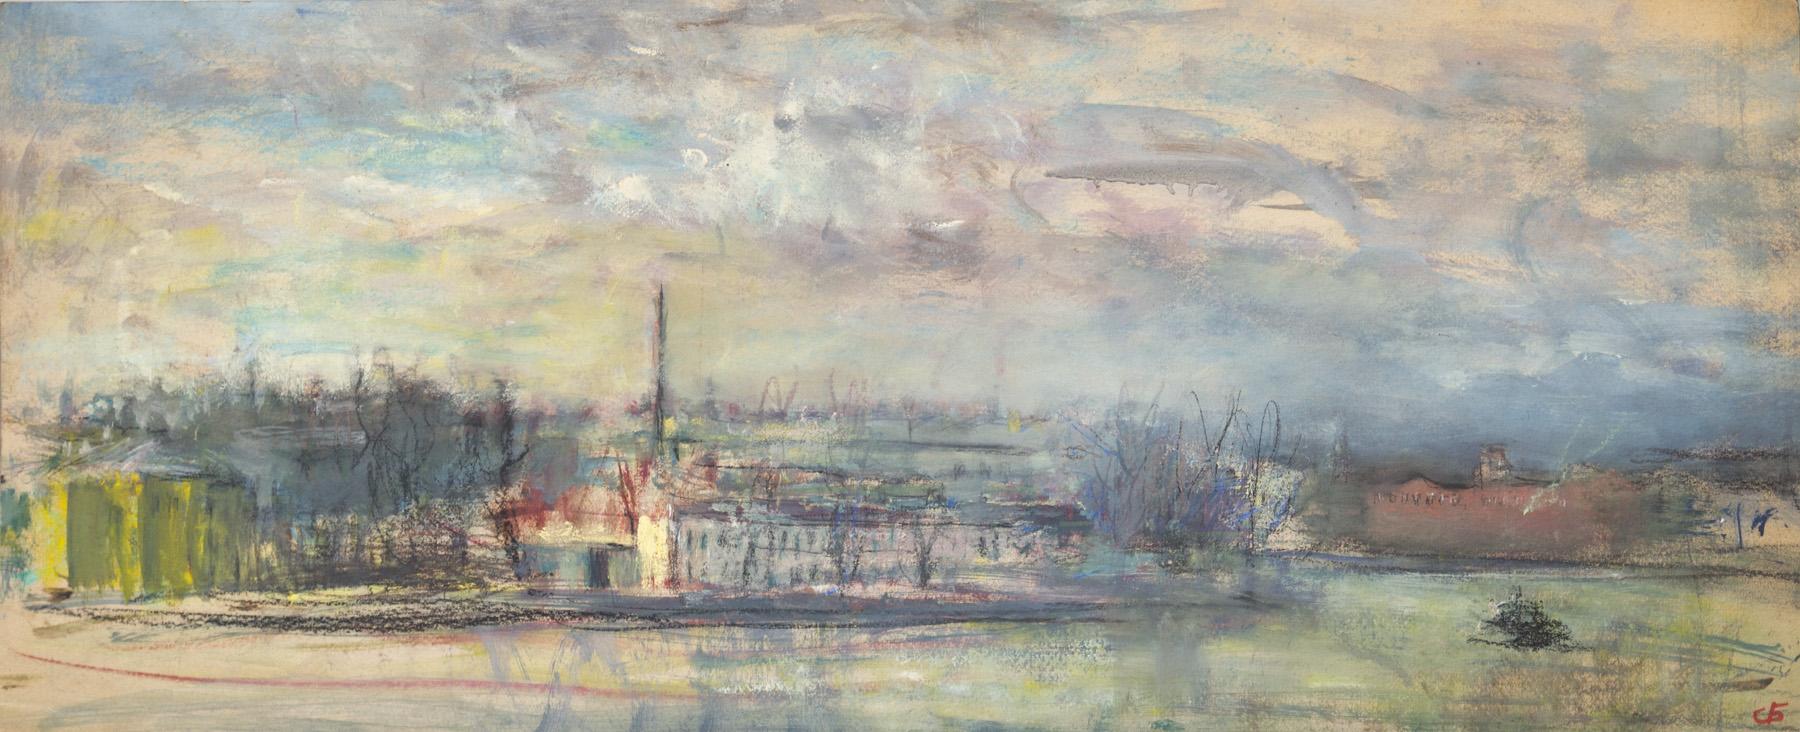 Neva near Smolny. Original modern art painting